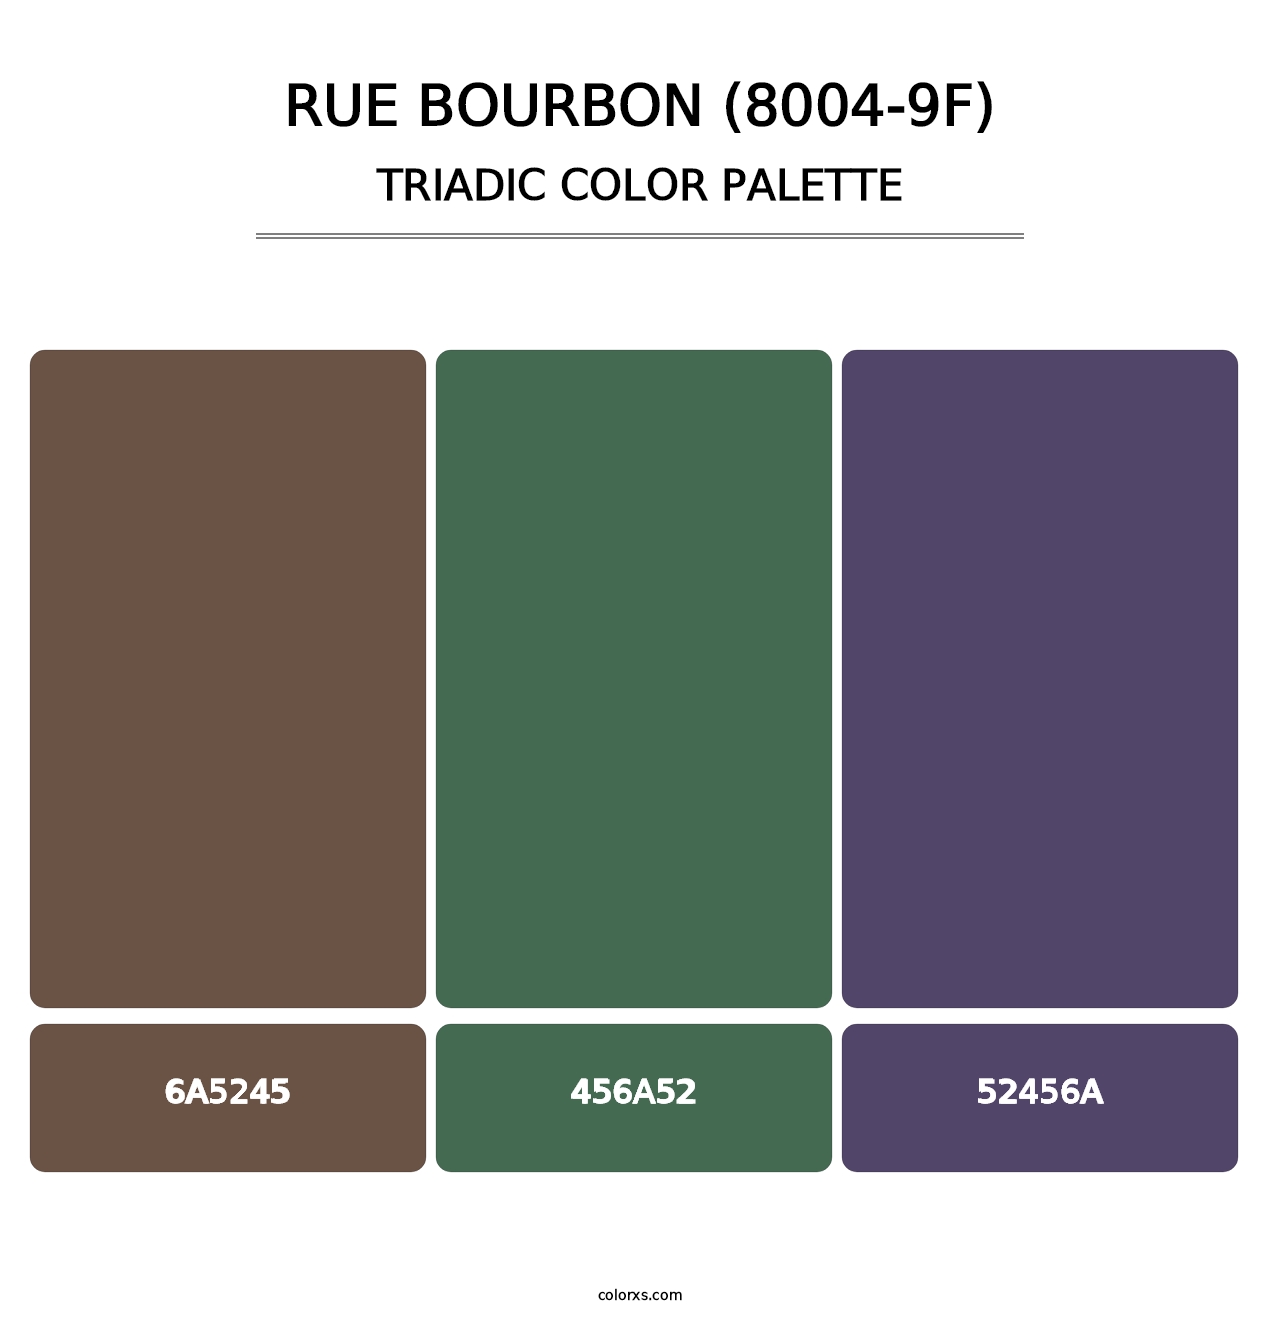 Rue Bourbon (8004-9F) - Triadic Color Palette